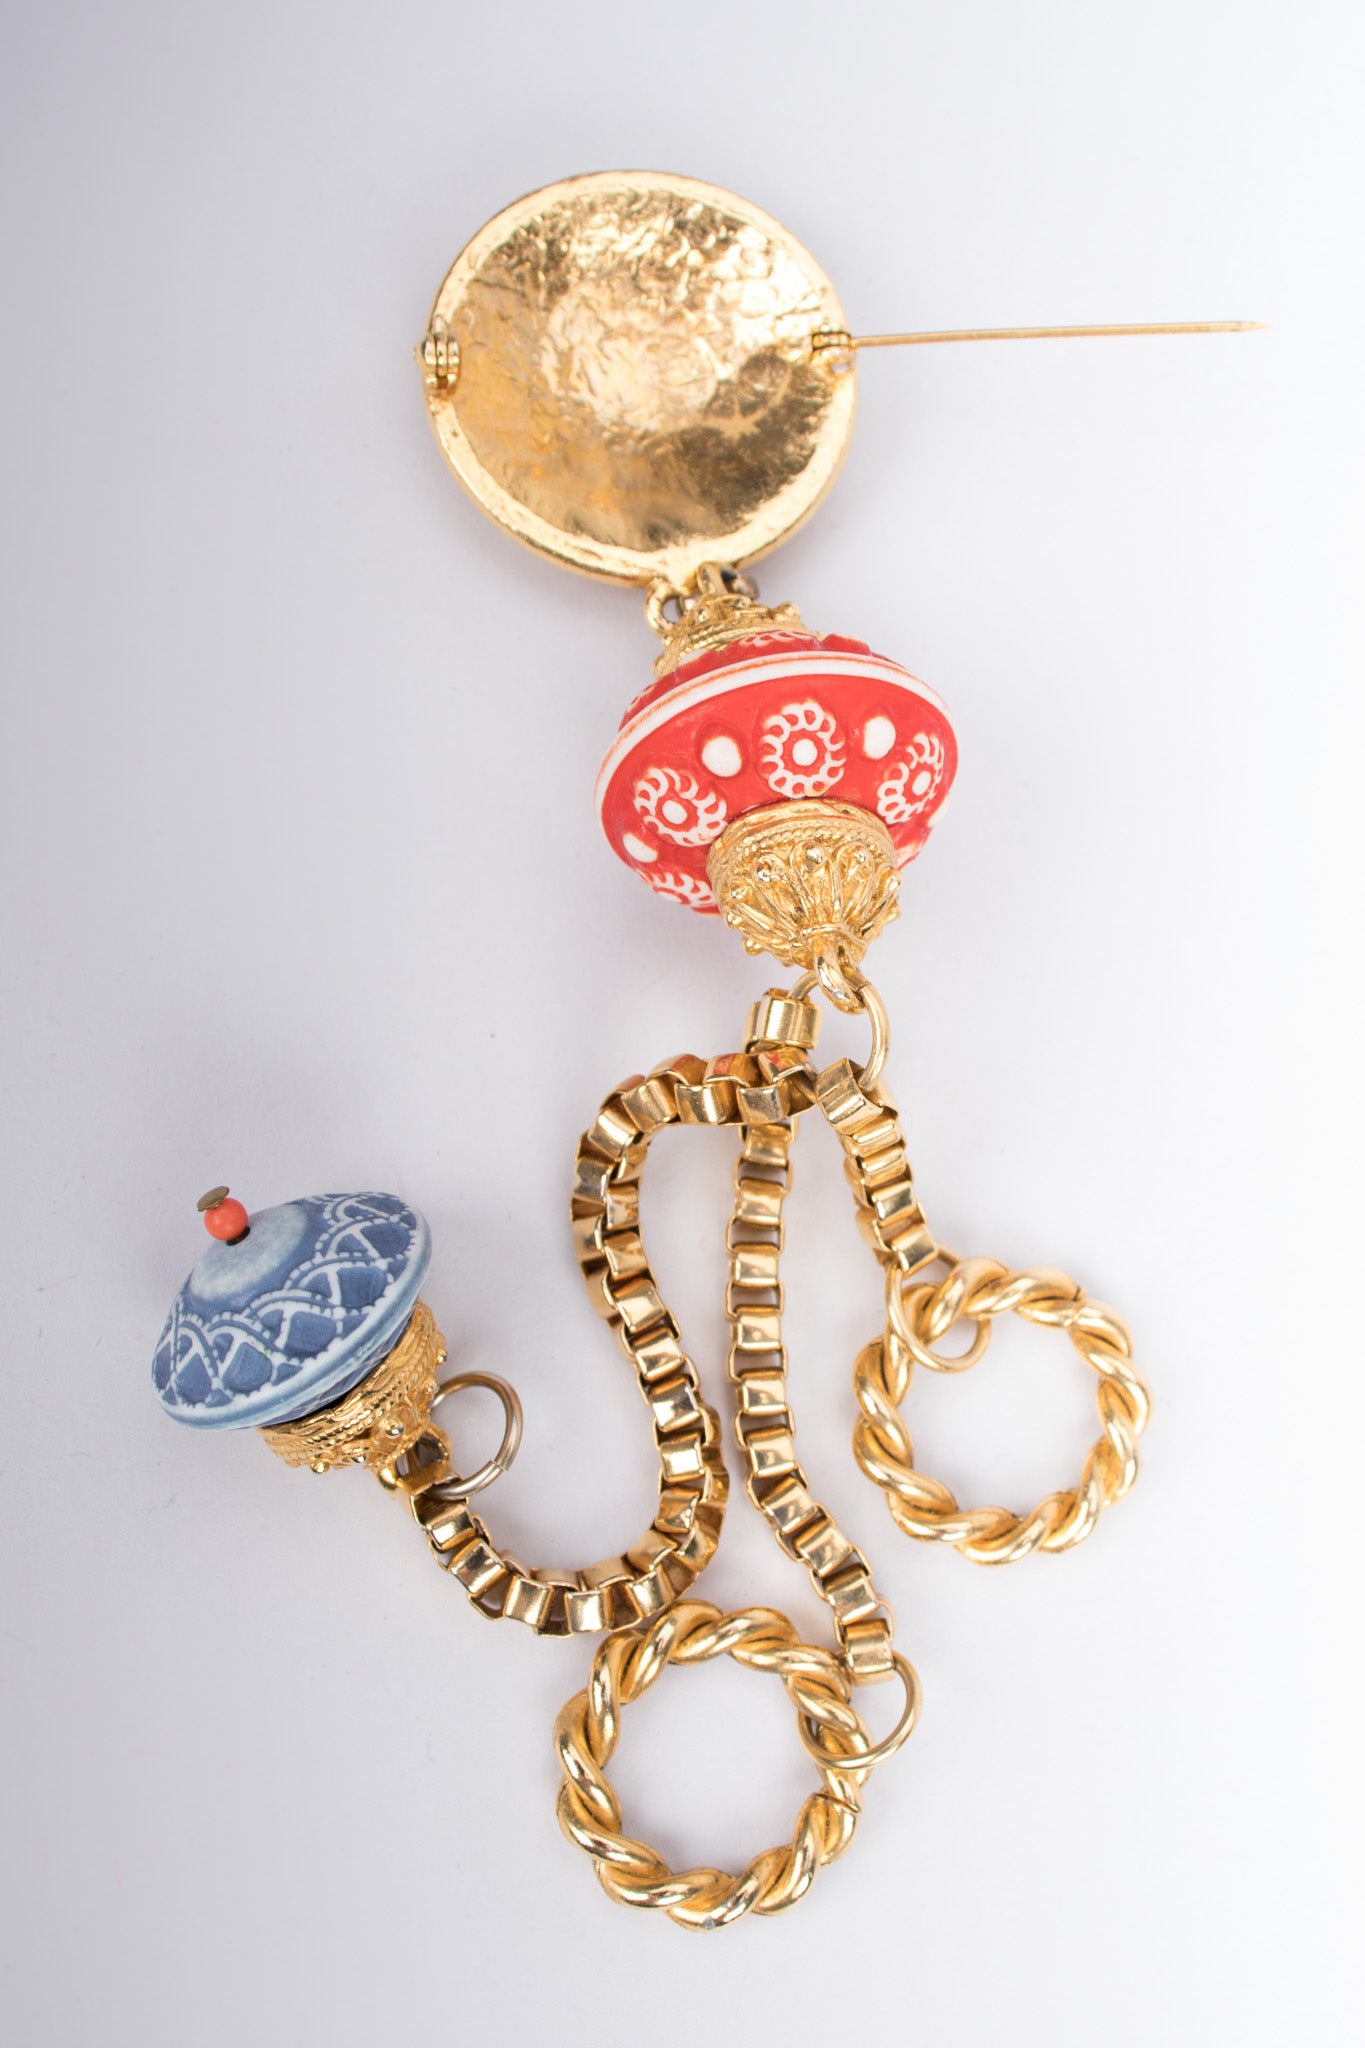 Magic Saucer Genie Vintage Charm Brooch